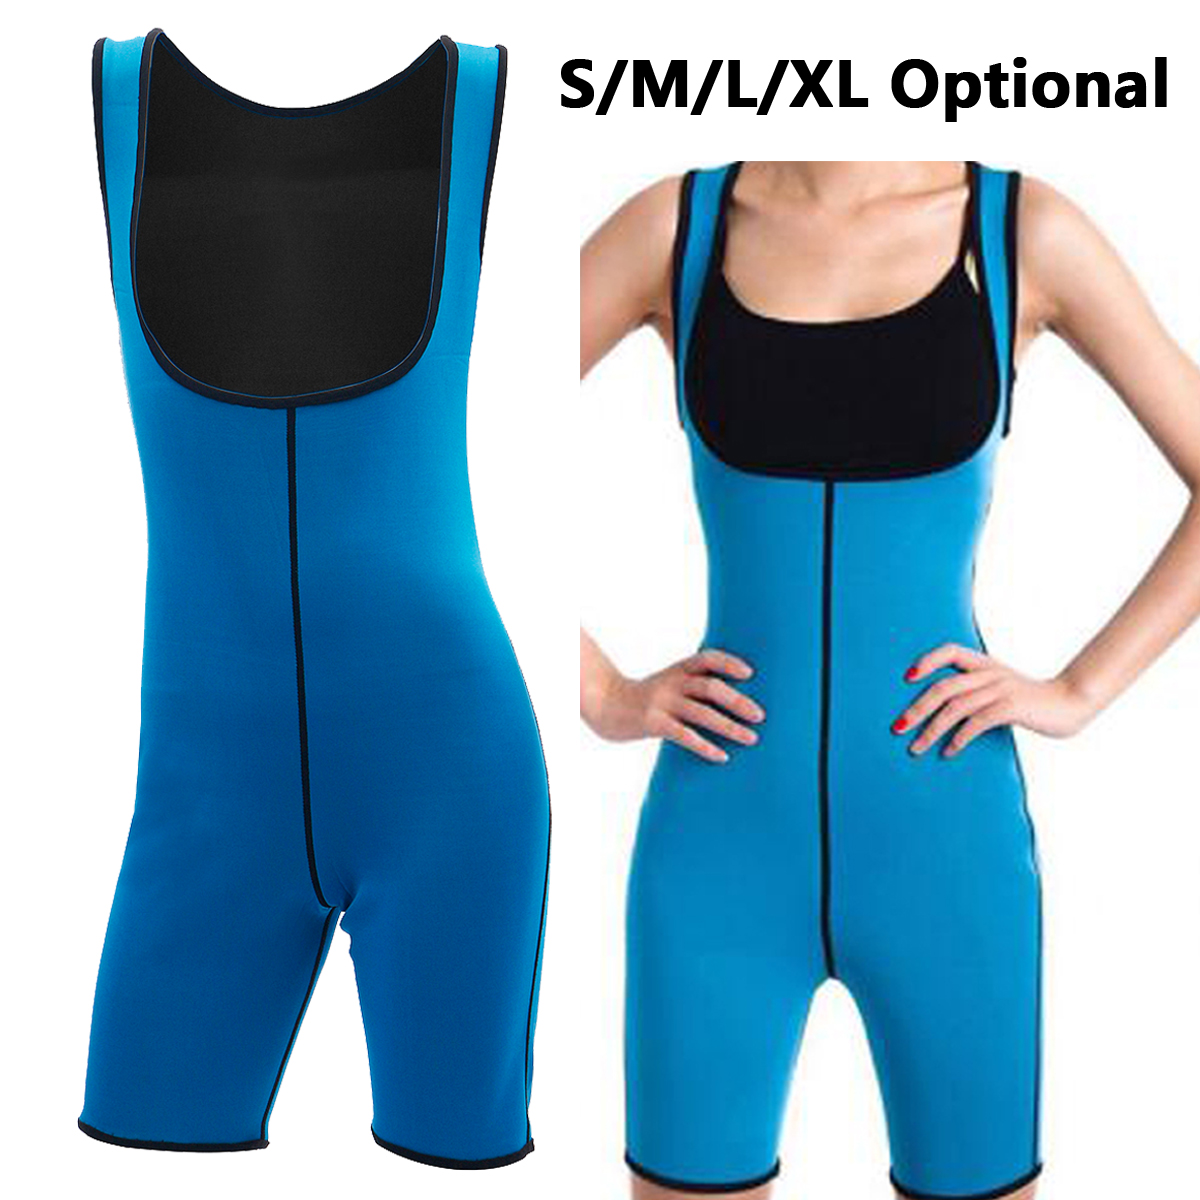 Womens-Shapewear-Full-Body-Sweat-Shaper-Fitness-Gym-Sport-Slimming-Keep-Fit-Sauna-Suit-Vest-1300071-2